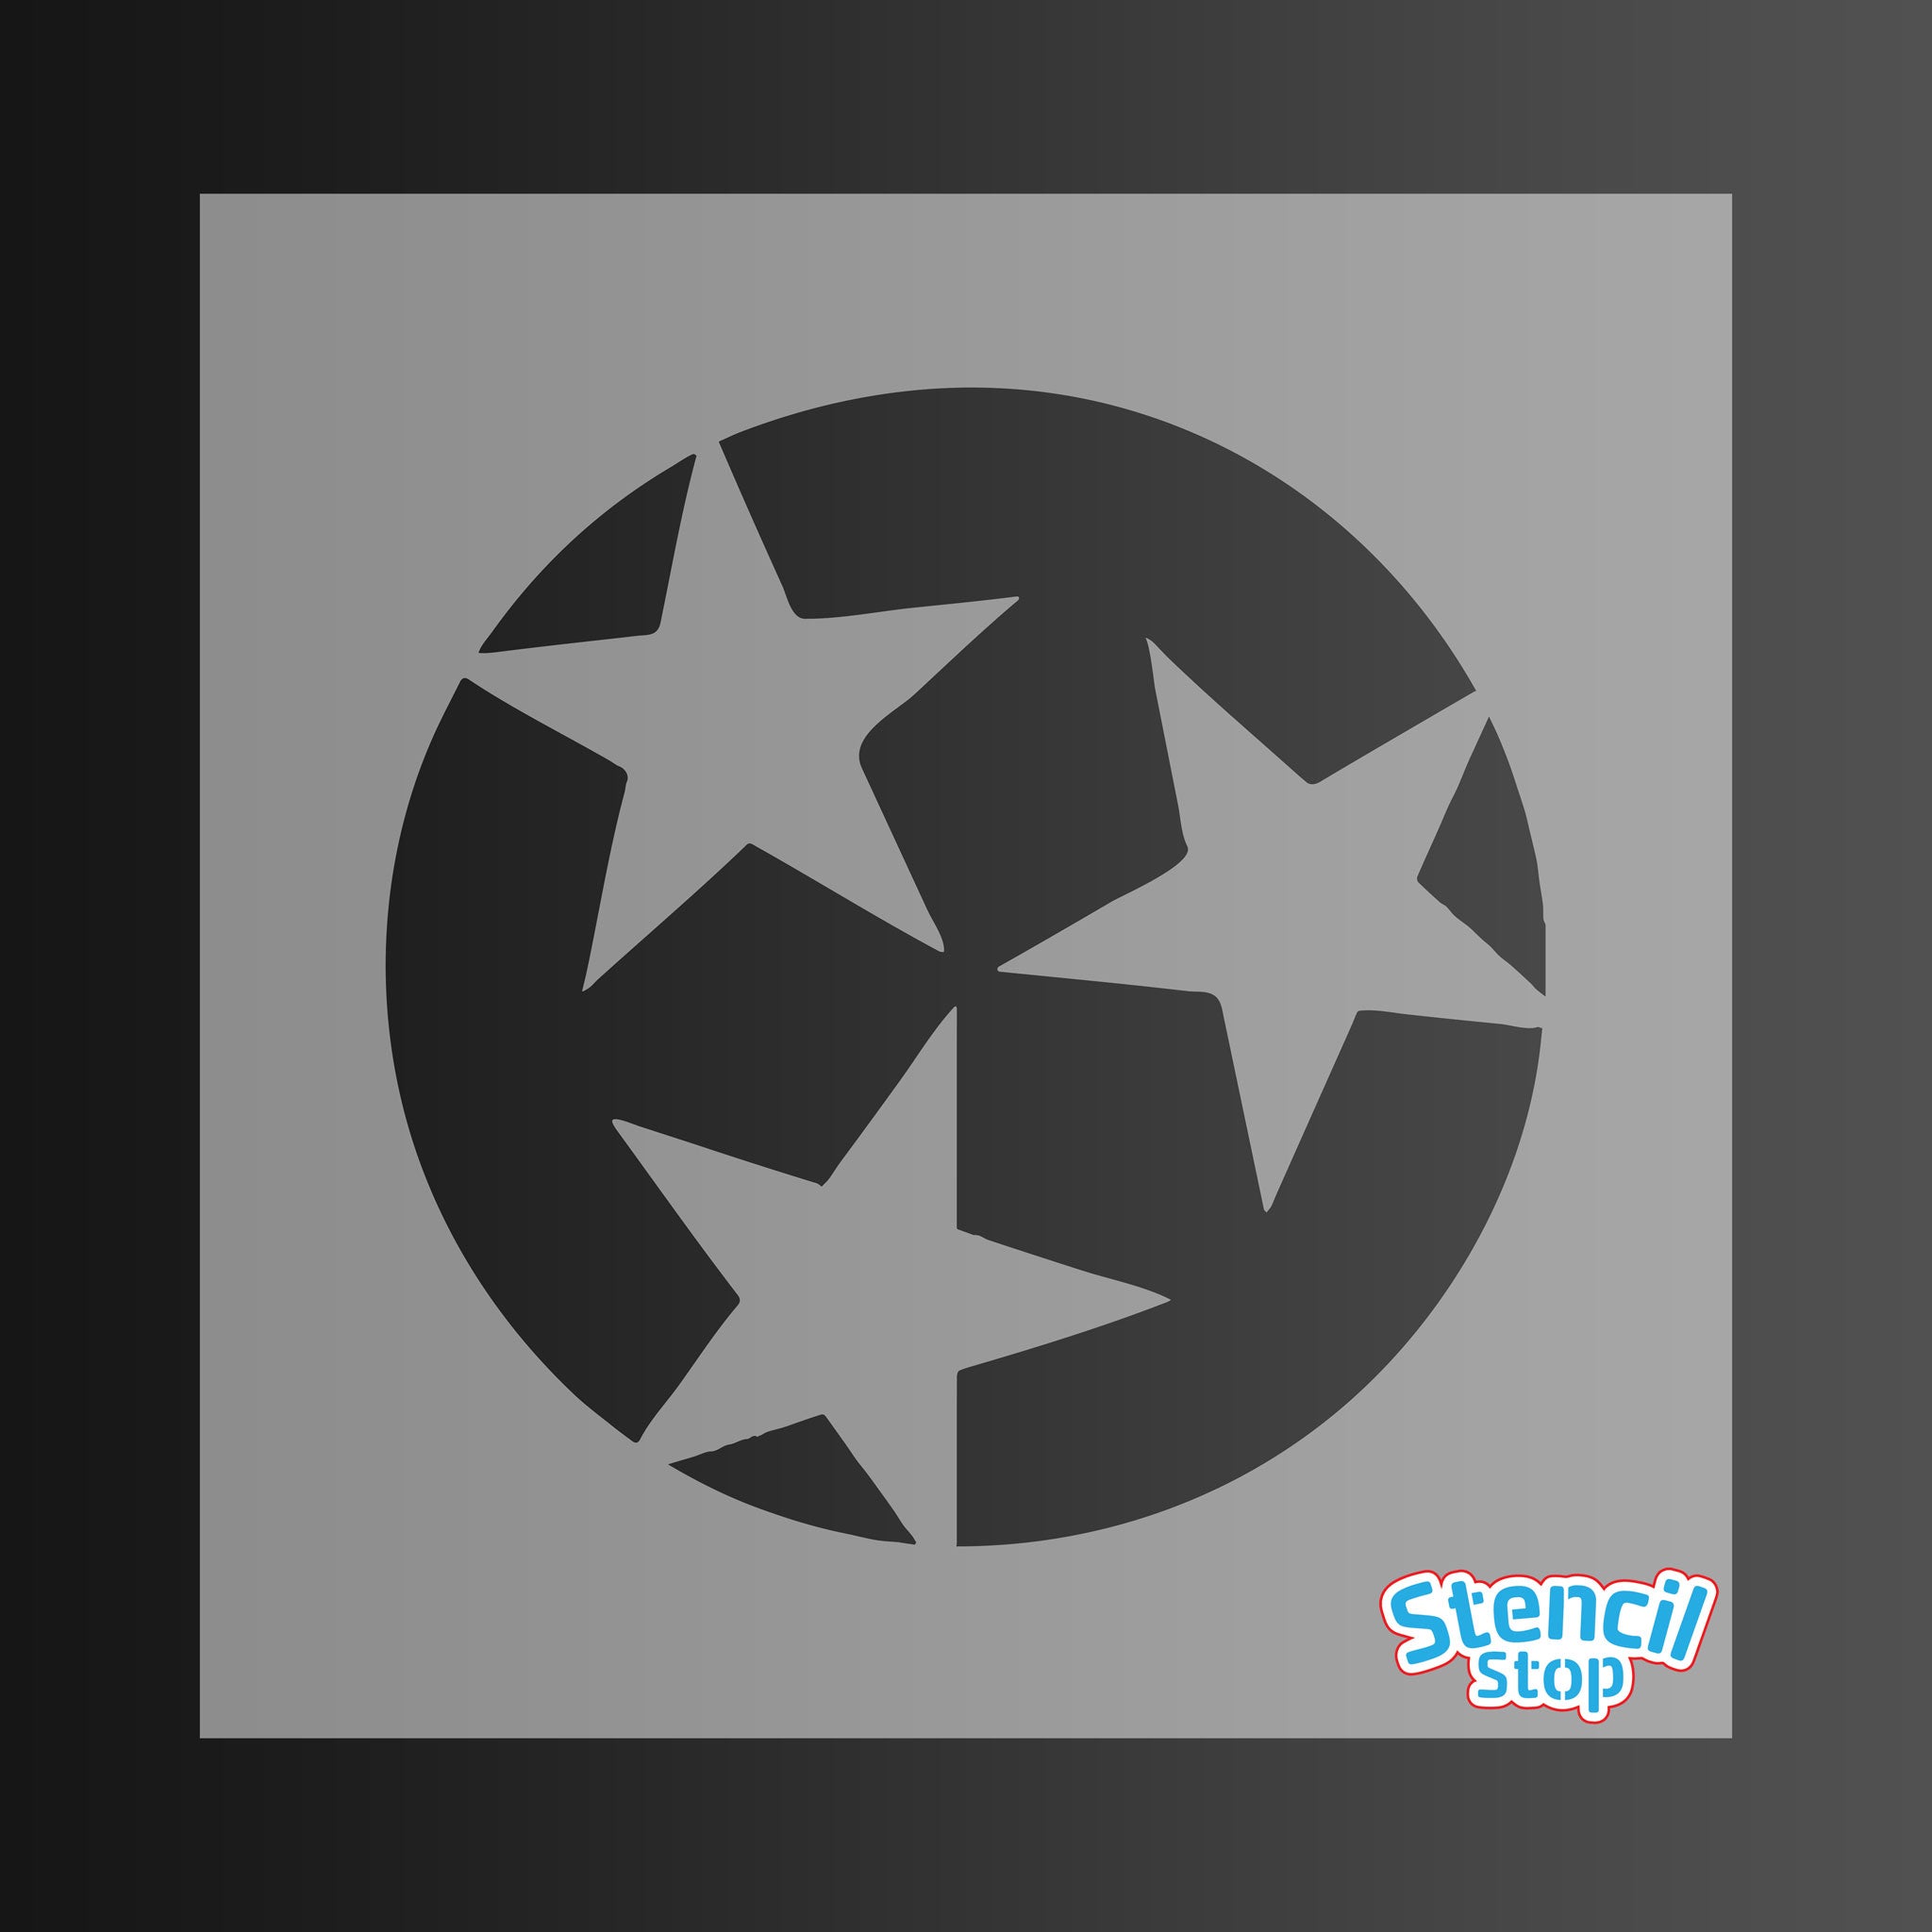 Tennessee Three Star State Flag Stencil